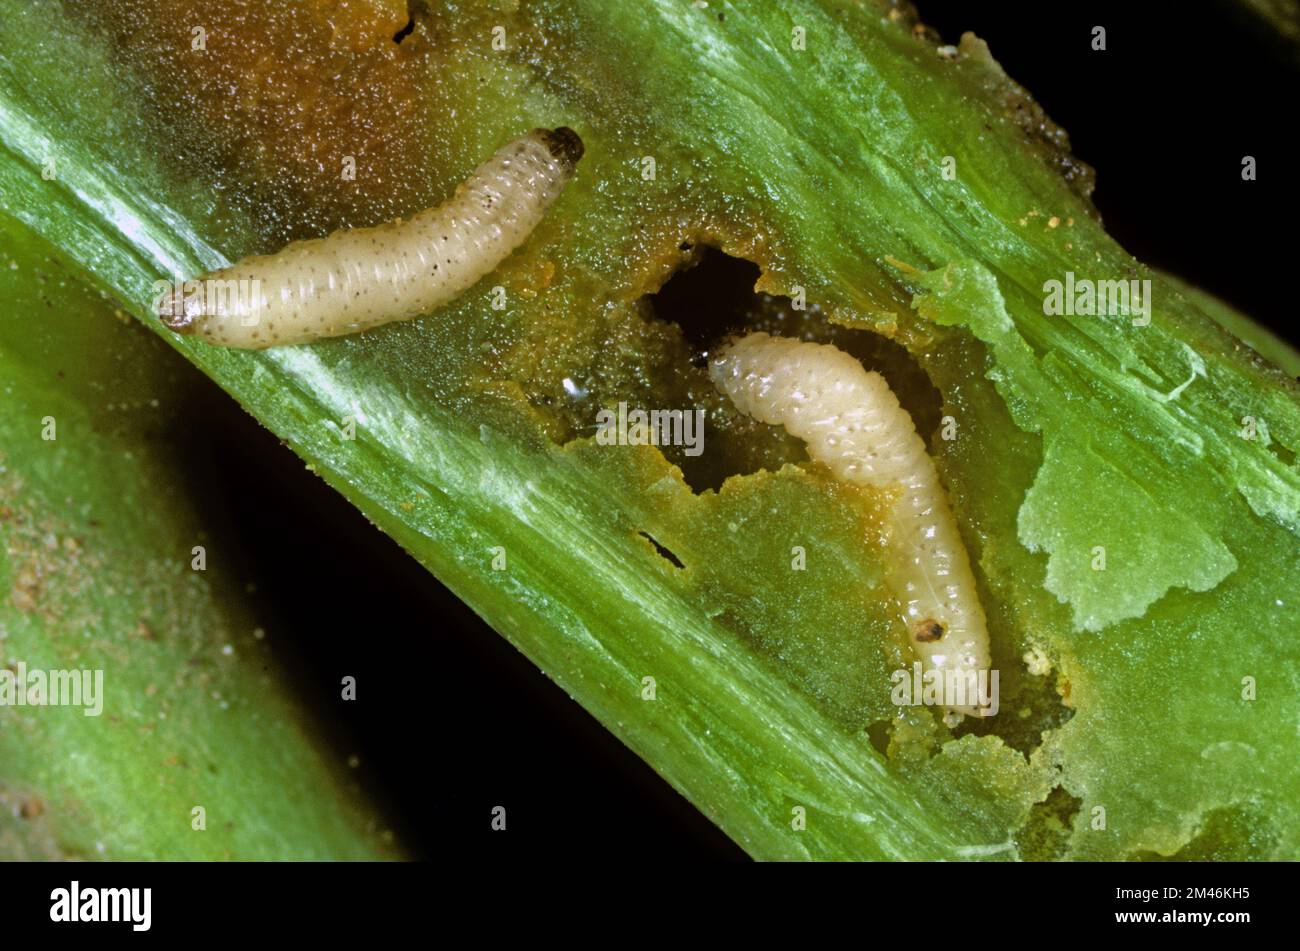 Kohlstamm-Flohkäfer-(Psylliodes chrysocephala-)Larven in beschädigtem Raps Brassica napus-) Pflanzenstamm Stockfoto